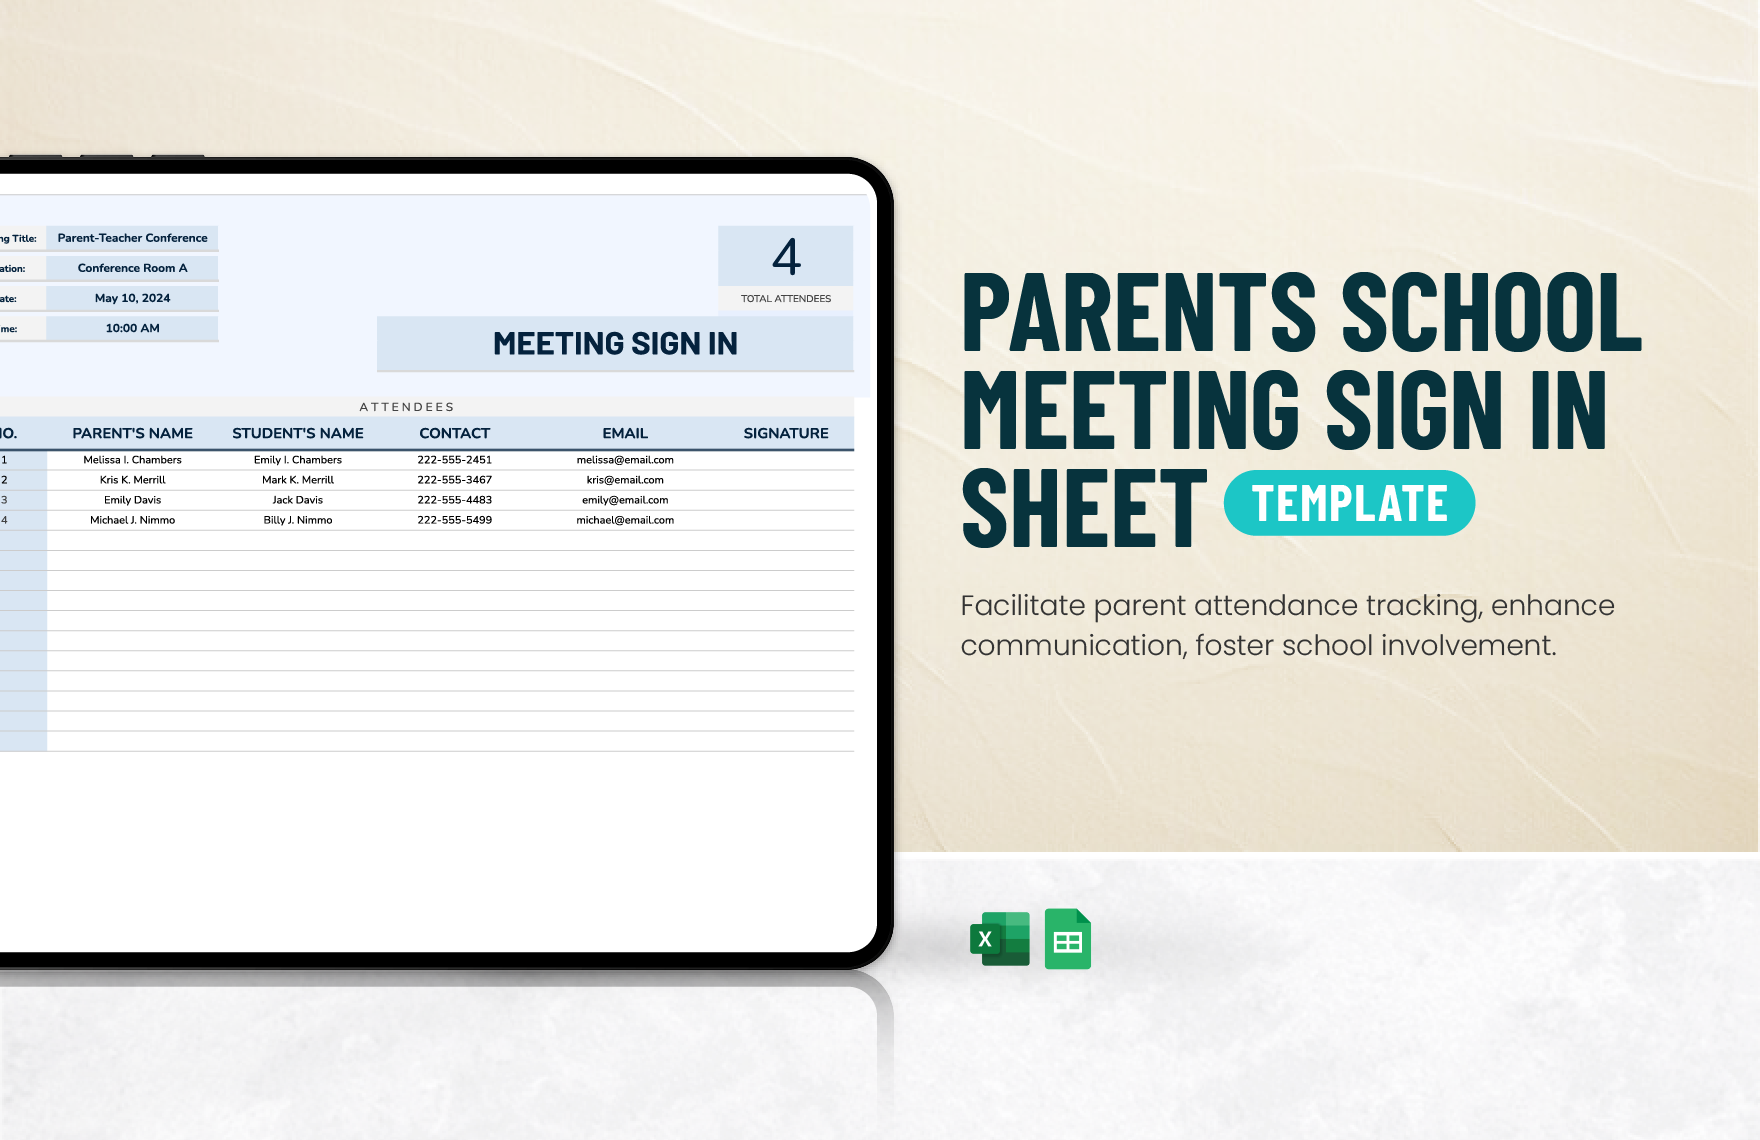 Parents School Meeting Sign in Sheet Template